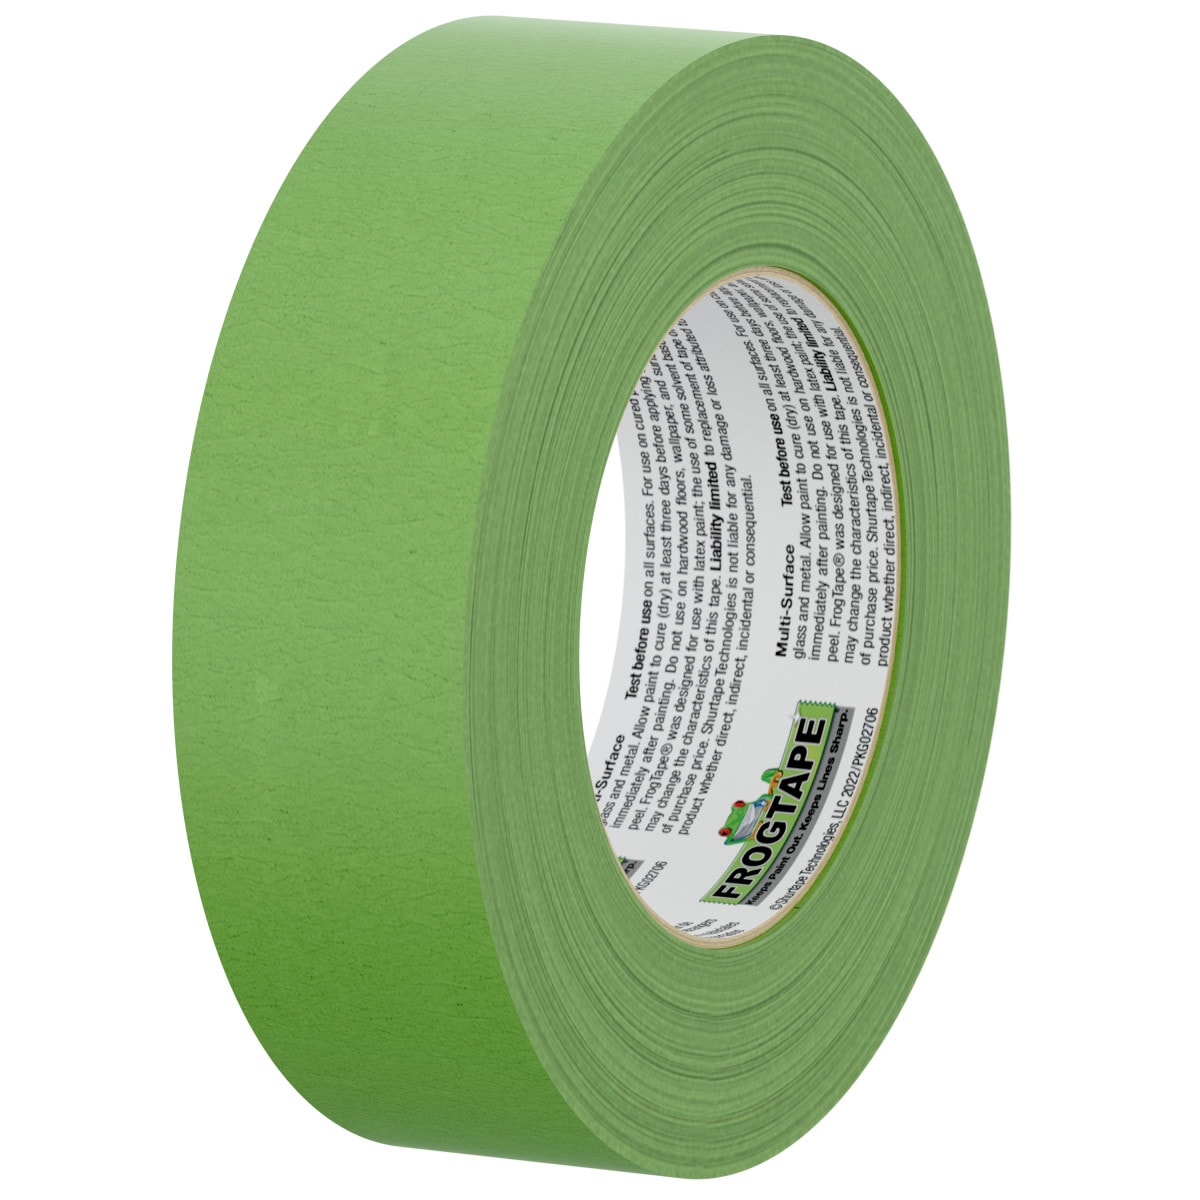 2 x 60 Yard Green Tape